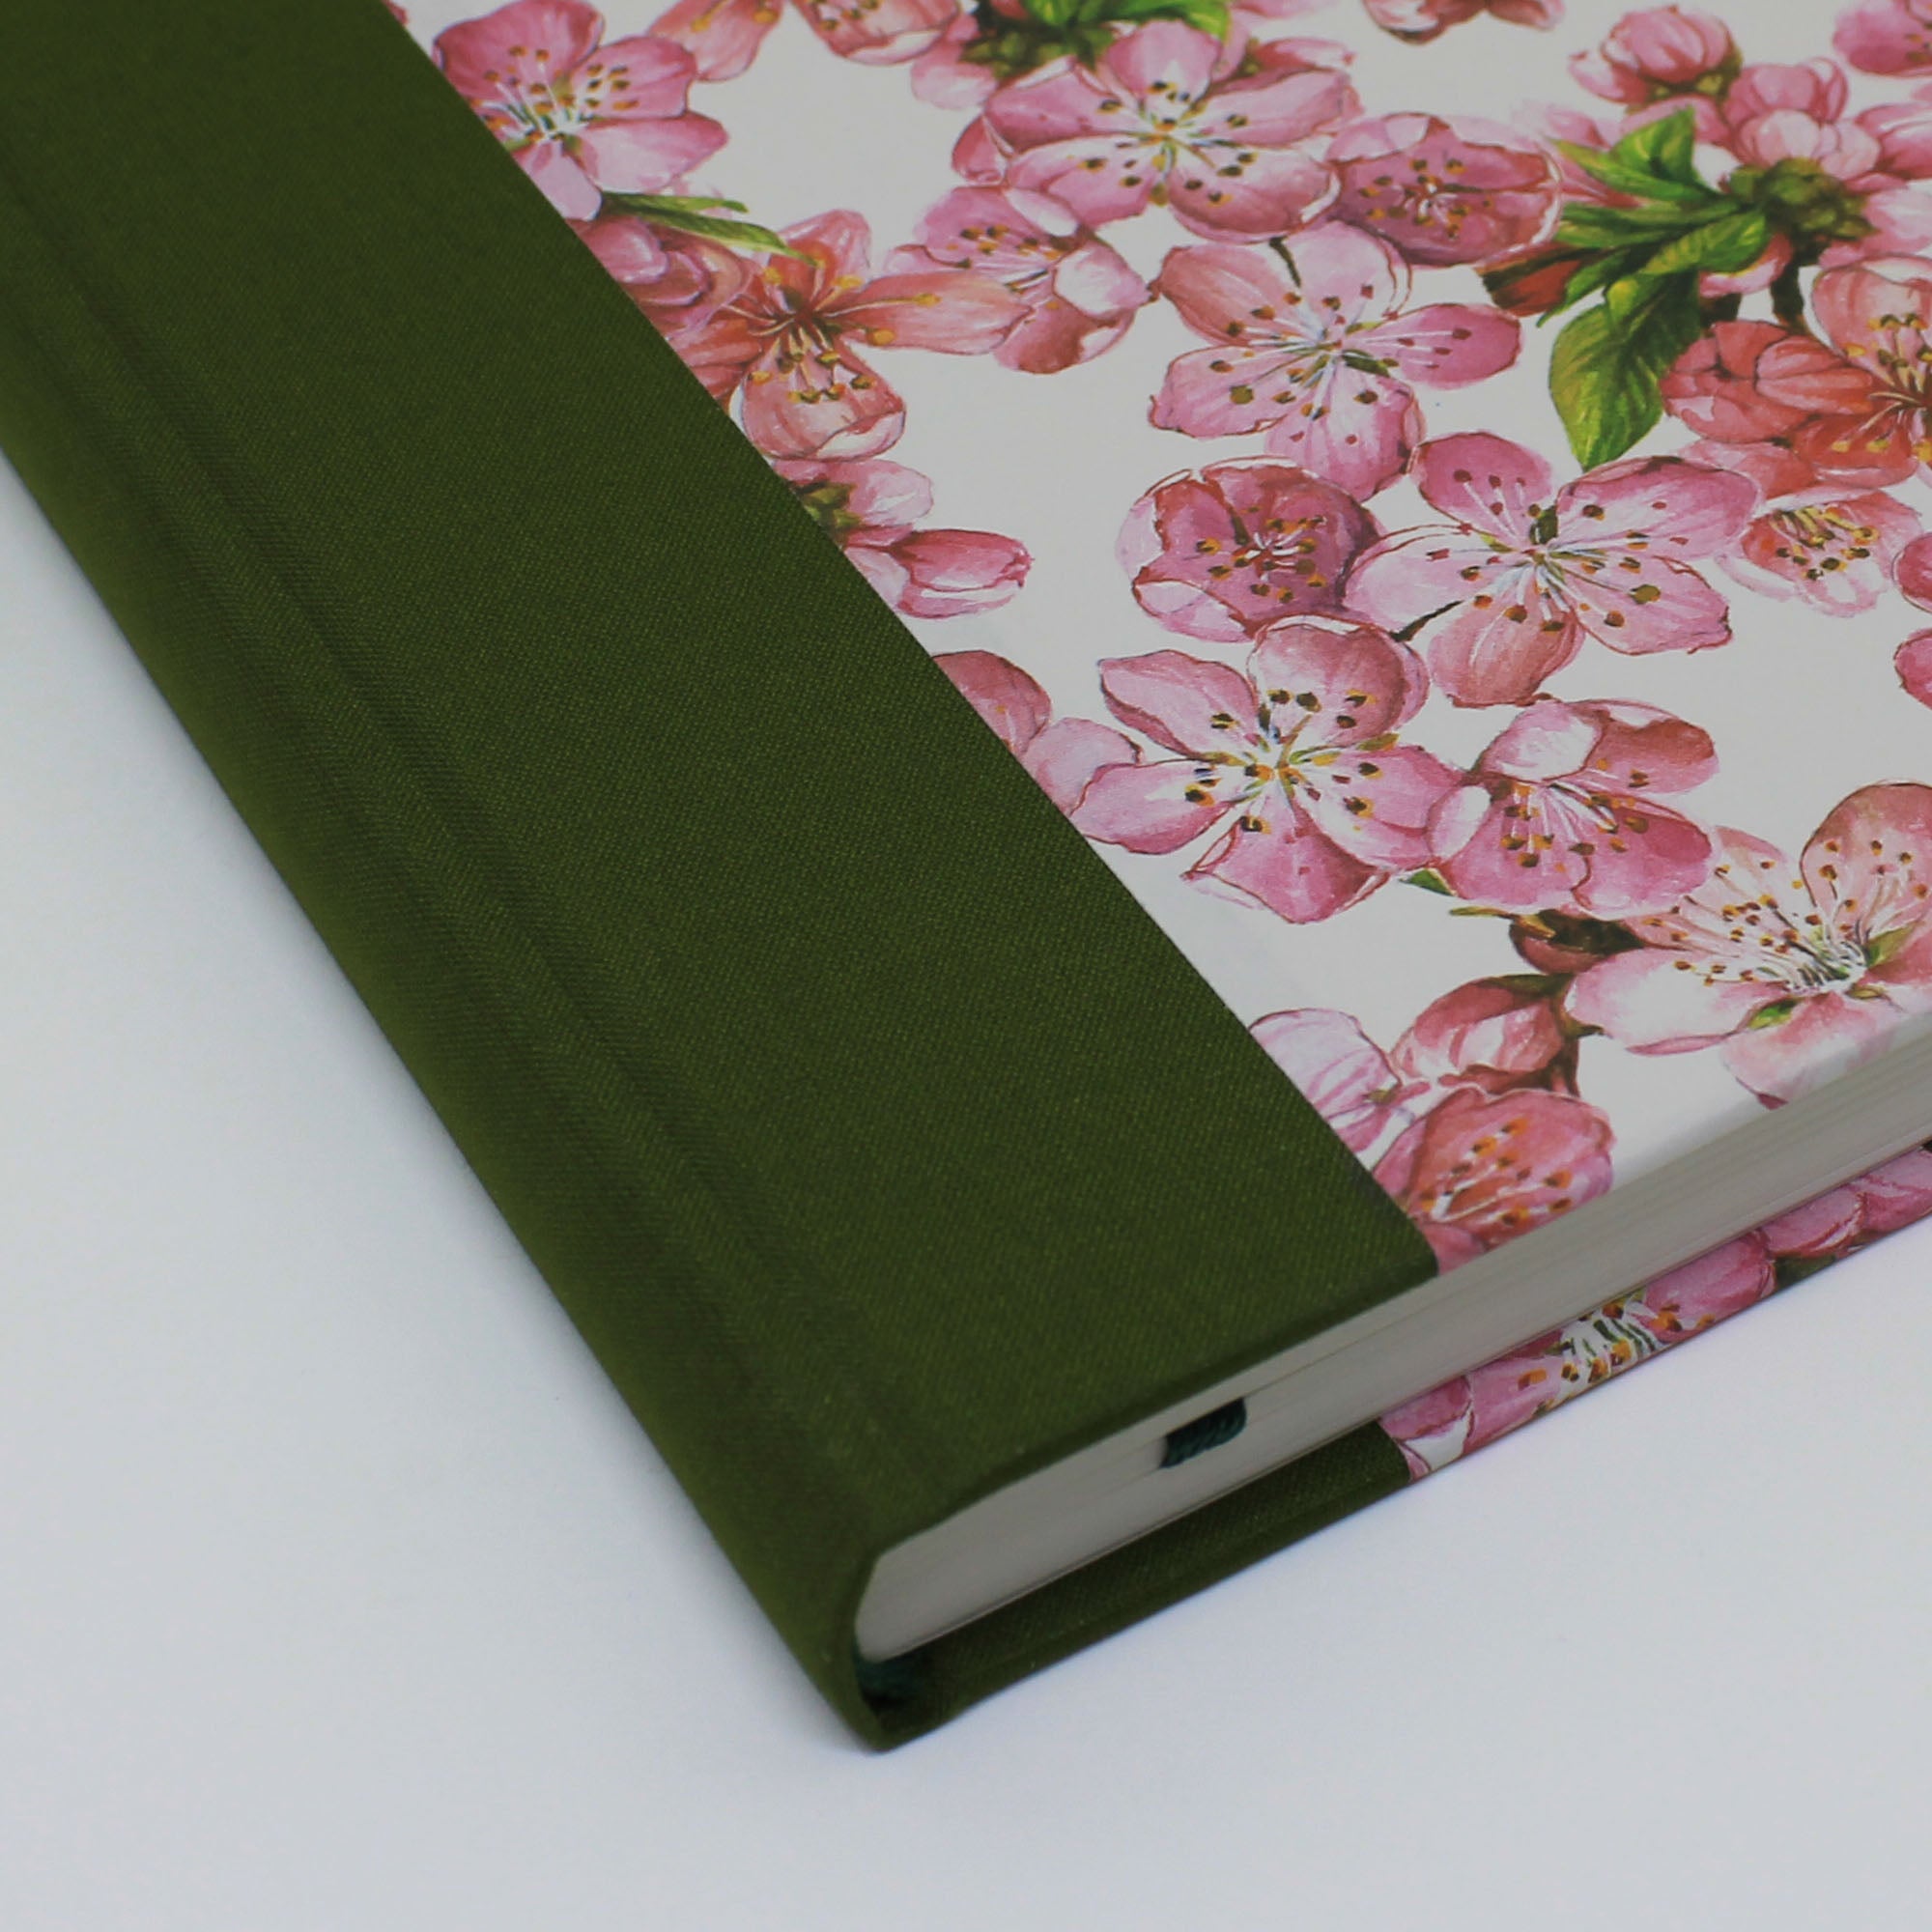 Vintage Notebook - Blossom